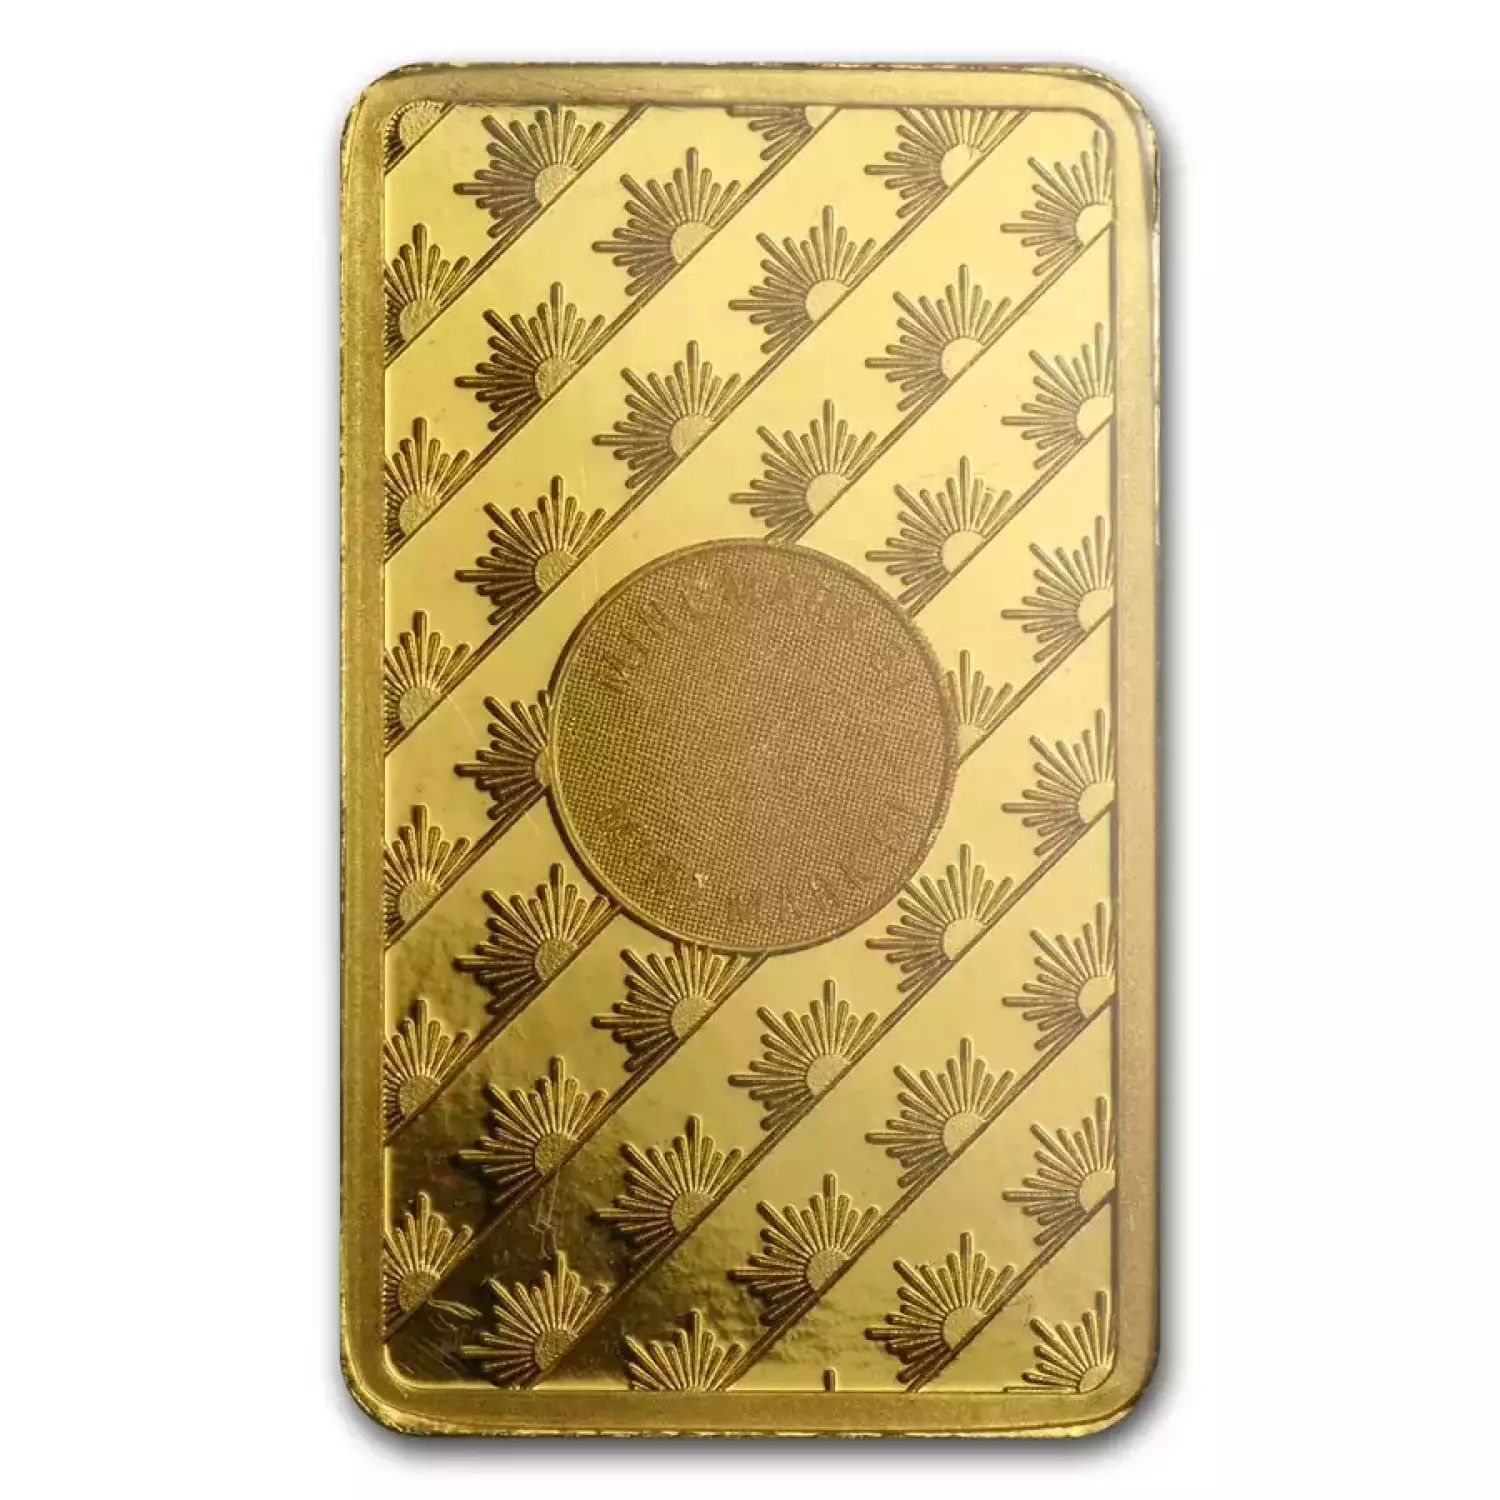 10 gram Gold Bar - Sunshine Minting New Design (In TEP Packaging) (4)